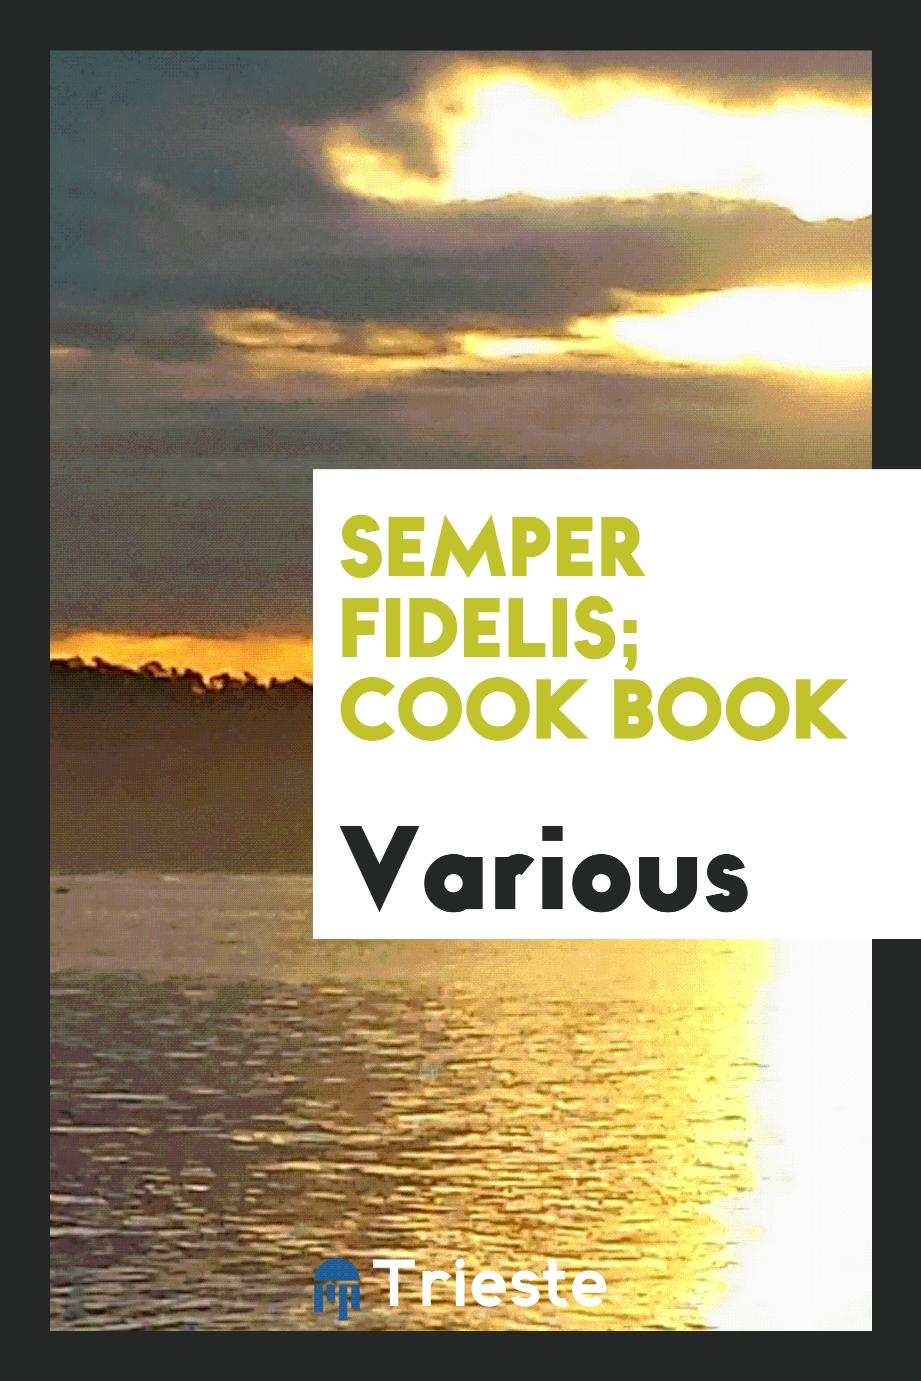 Semper Fidelis; Cook book